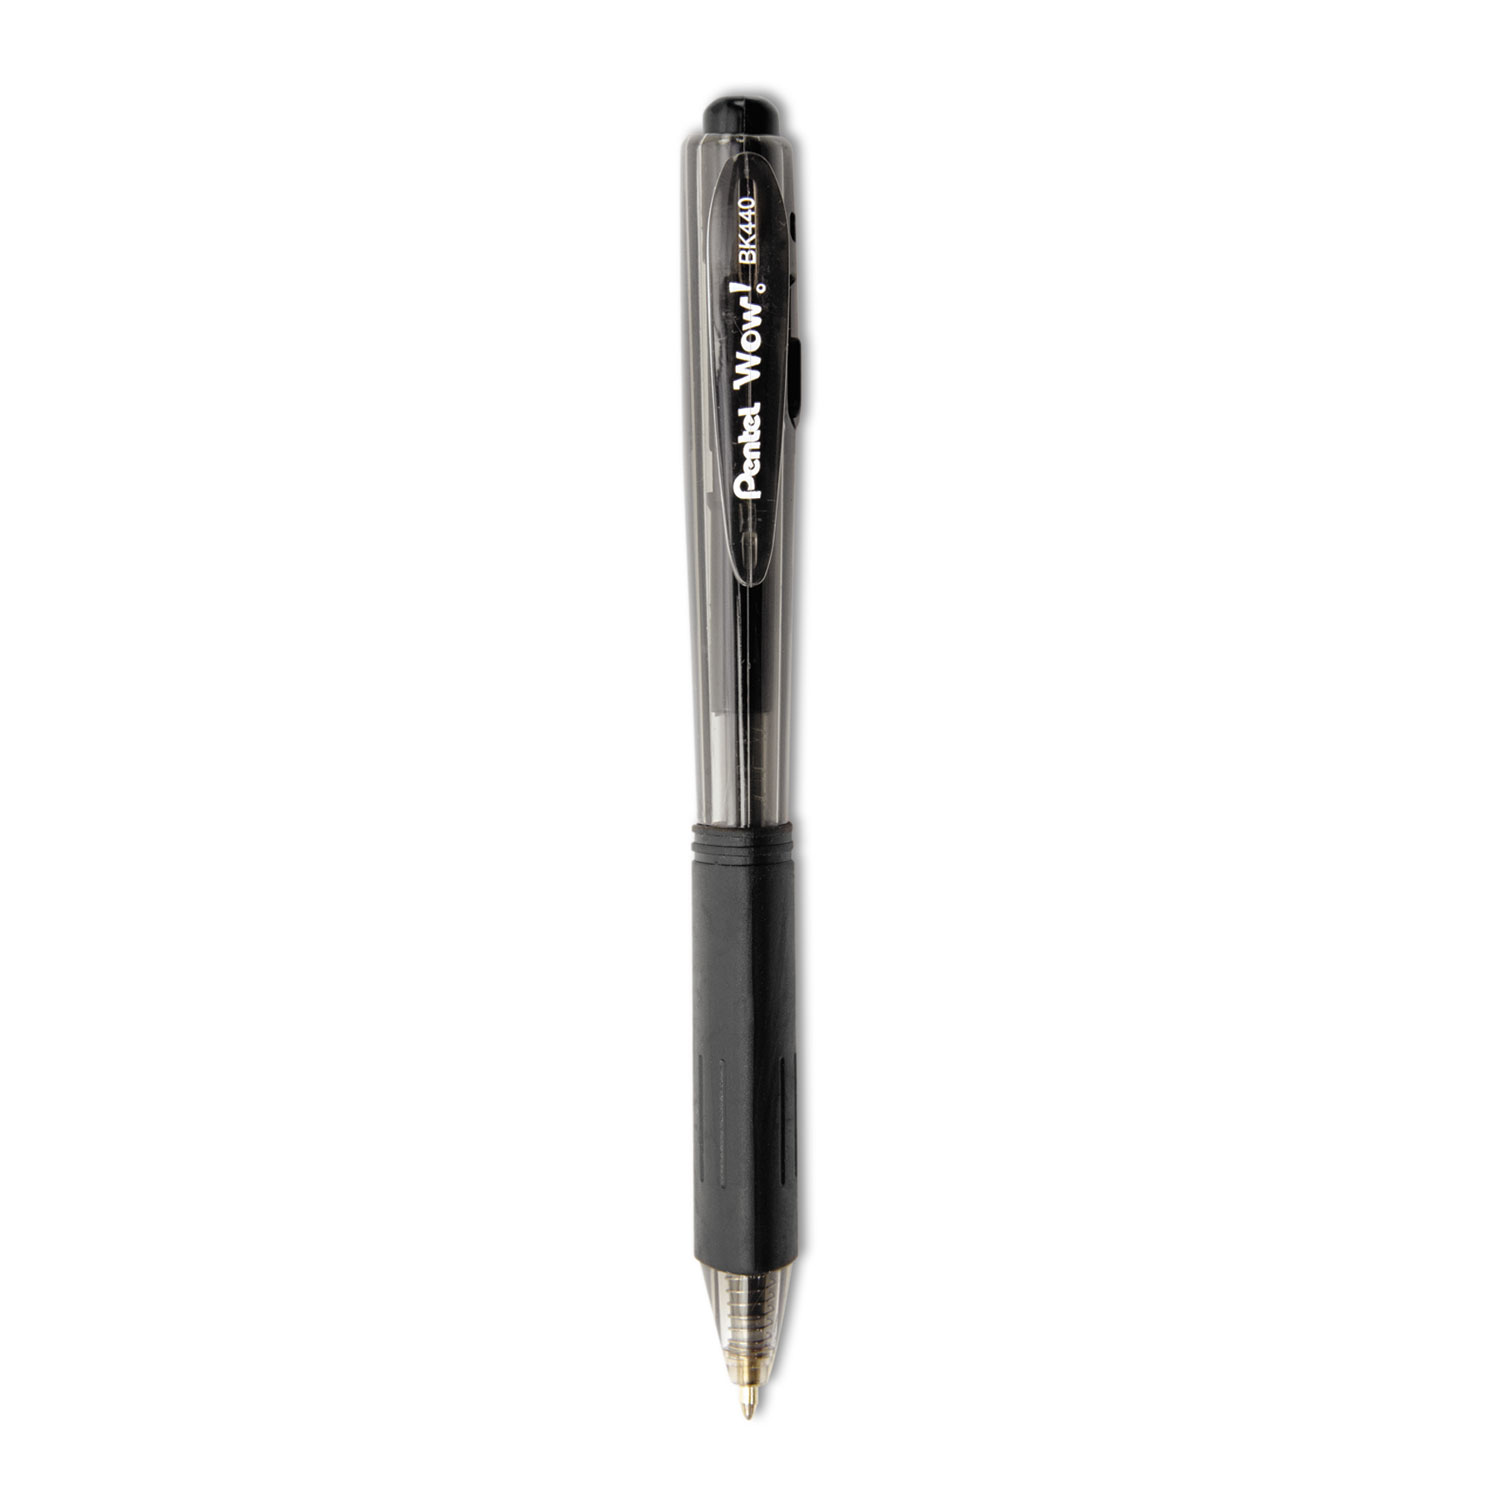 Pentel R.S.V.P. Retractable Ballpoint Pens, 1mm Point - Assorted Colors -  8/PK 